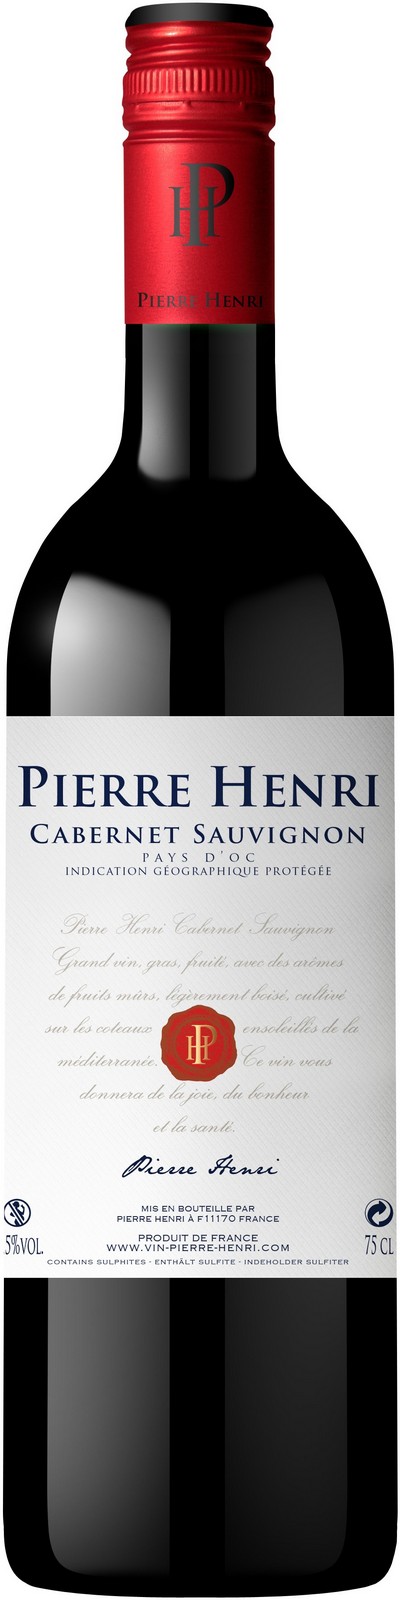 pierre-henri-cabernet-sauvignon-2018